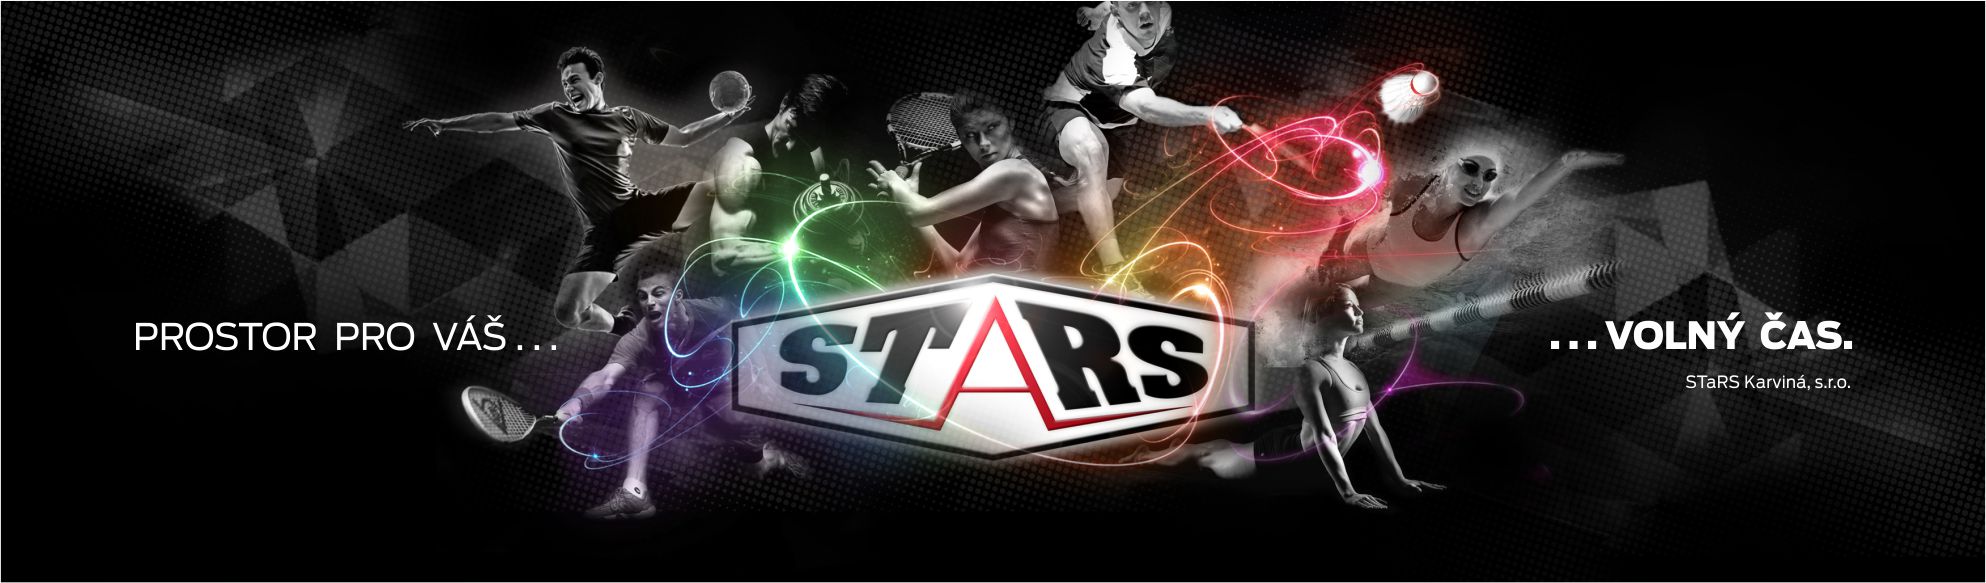 Stars Karviná - sport a pohybová rekreace v Karviné